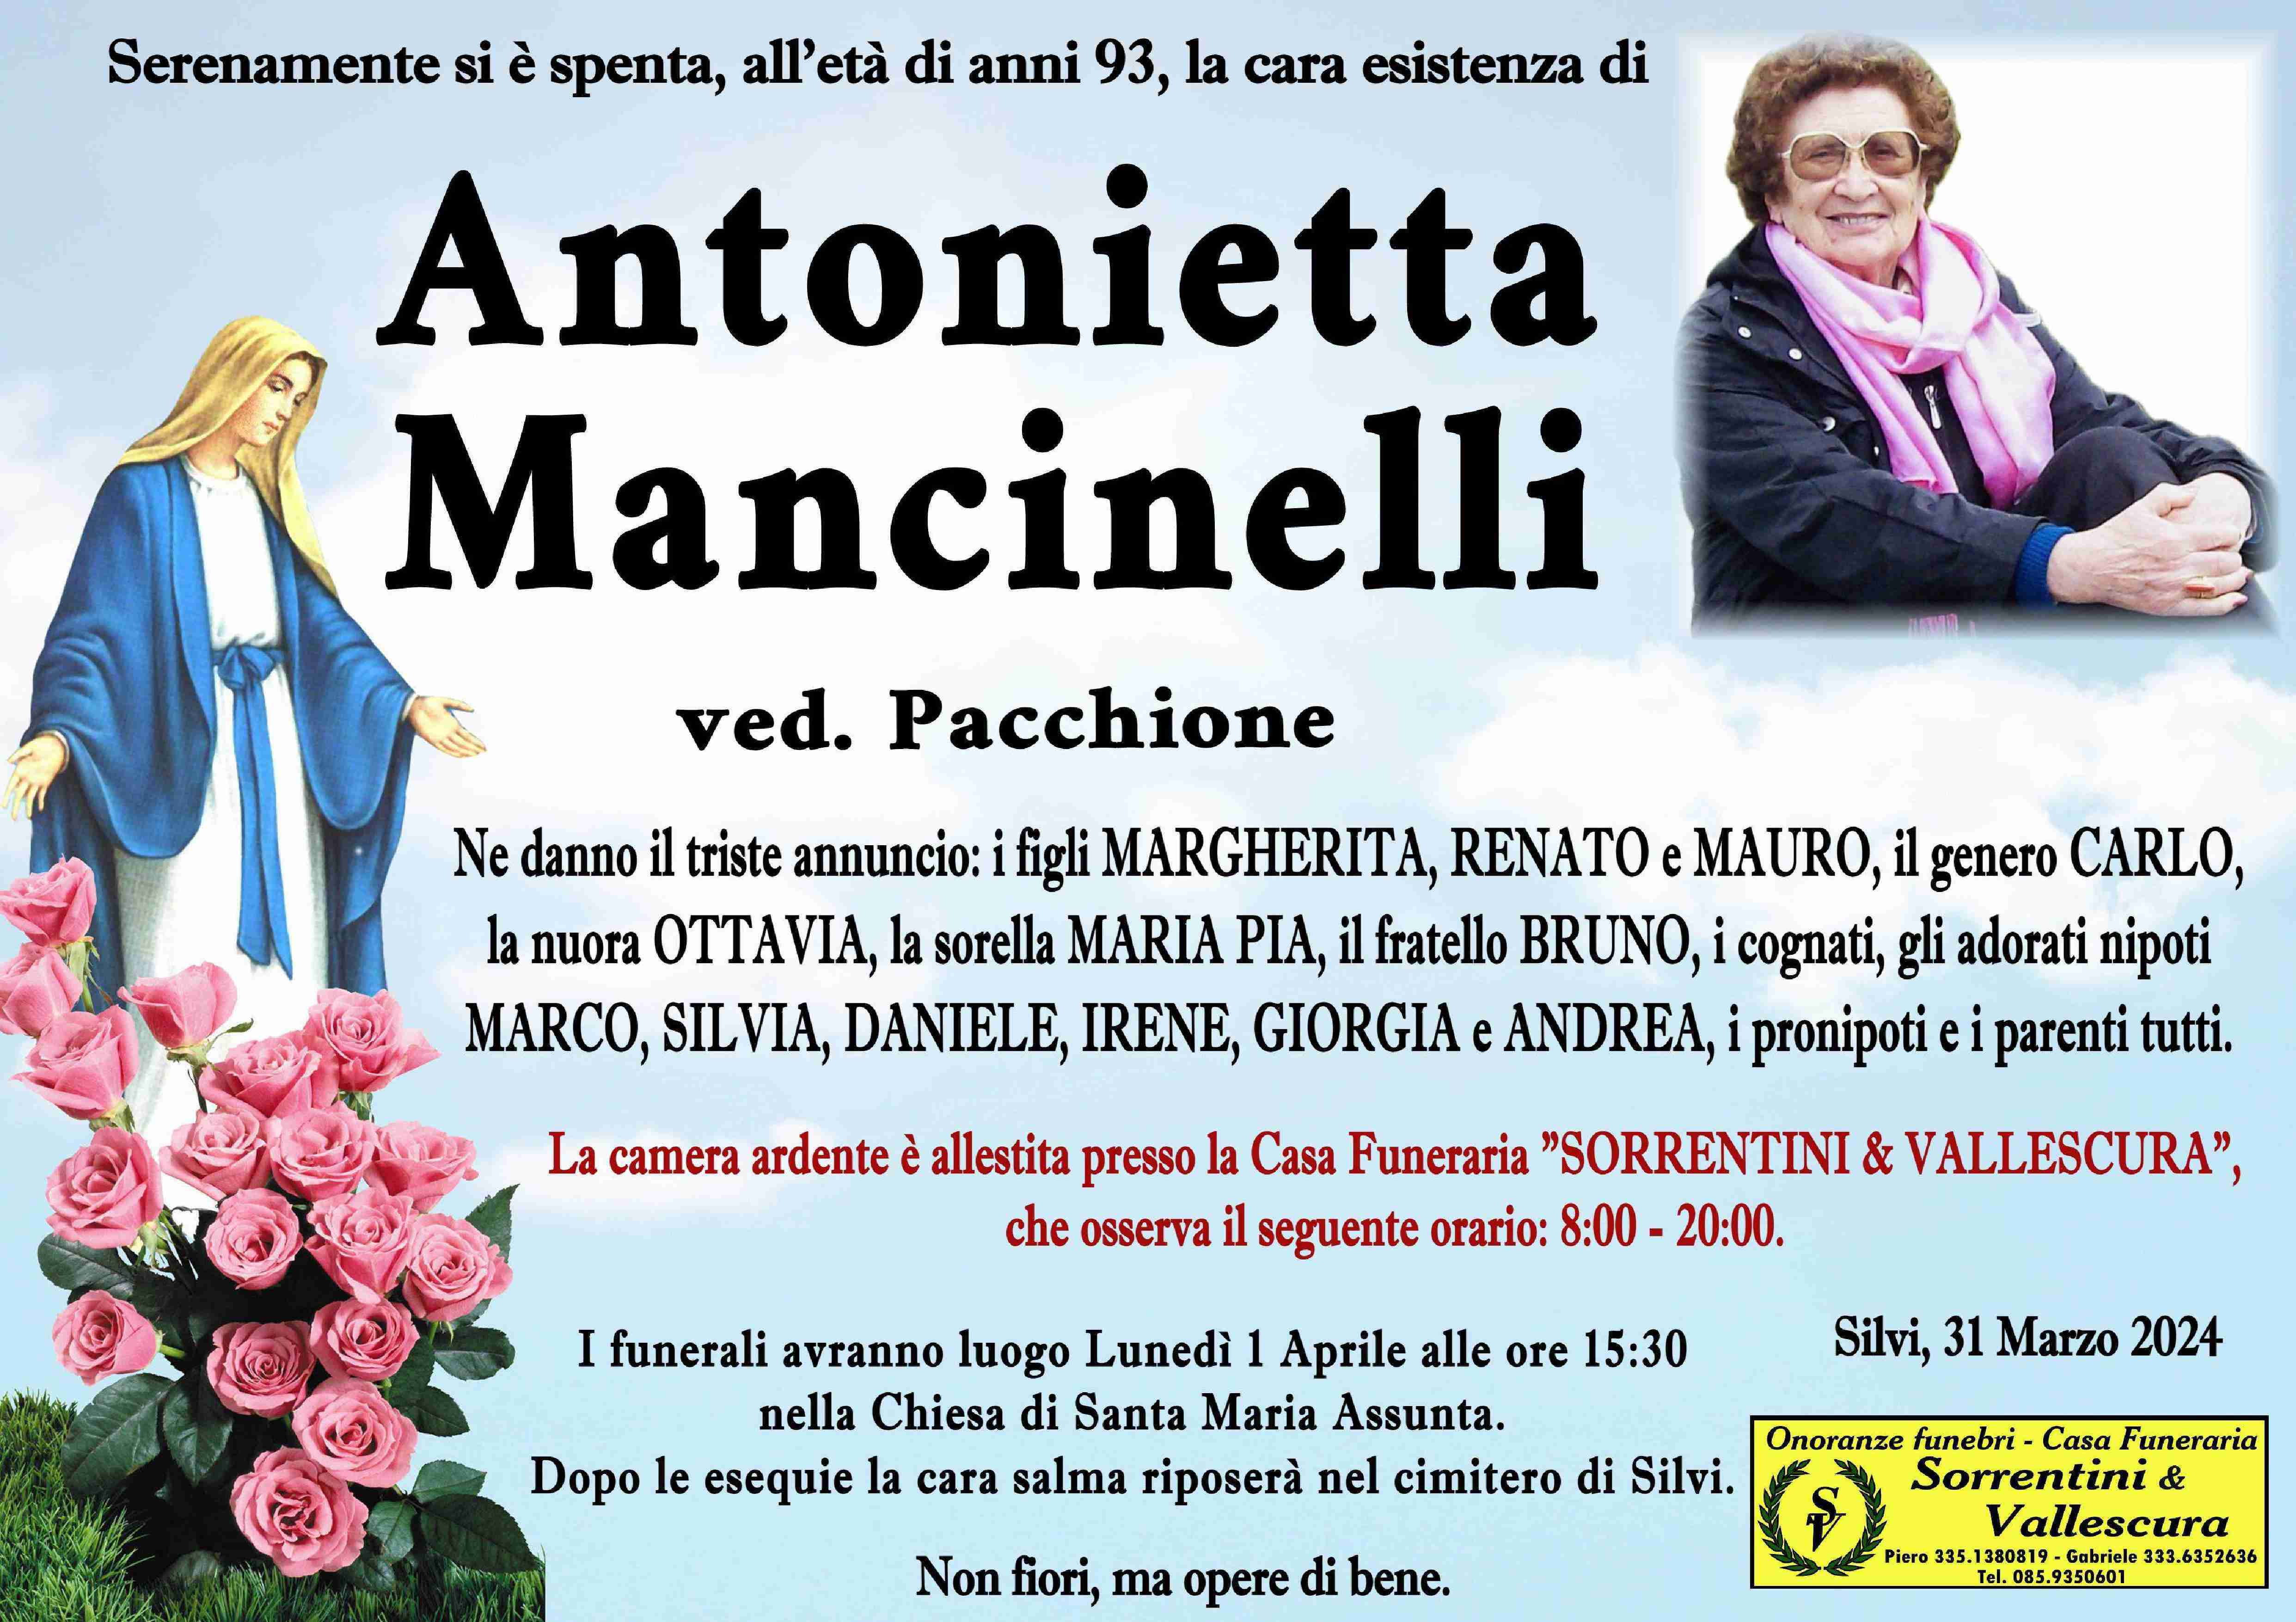 Antonietta Mancinelli